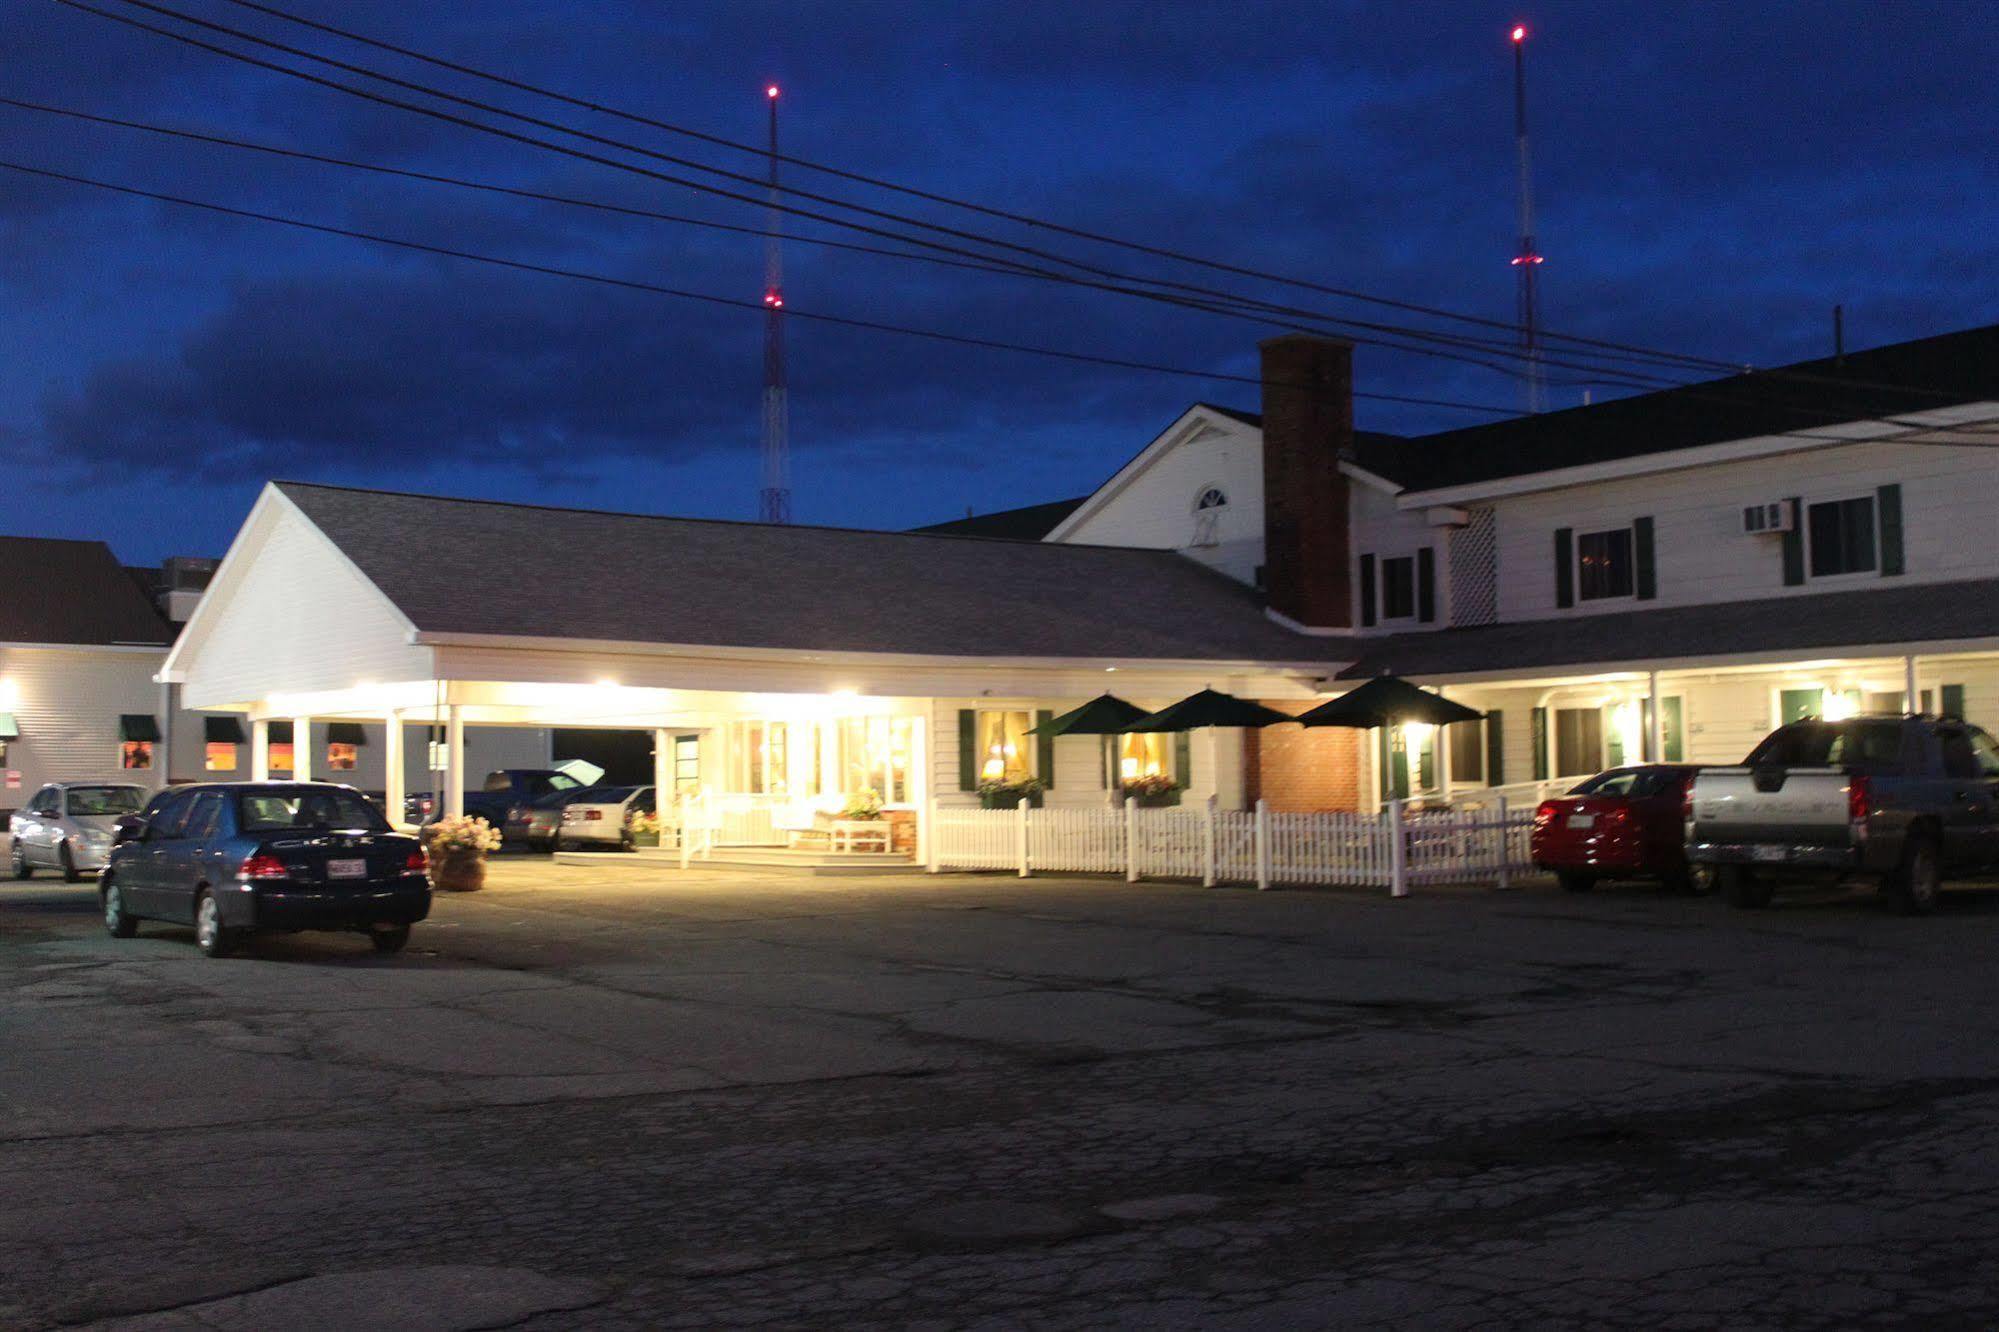 Maine Woods Inn Brewer Exterior photo